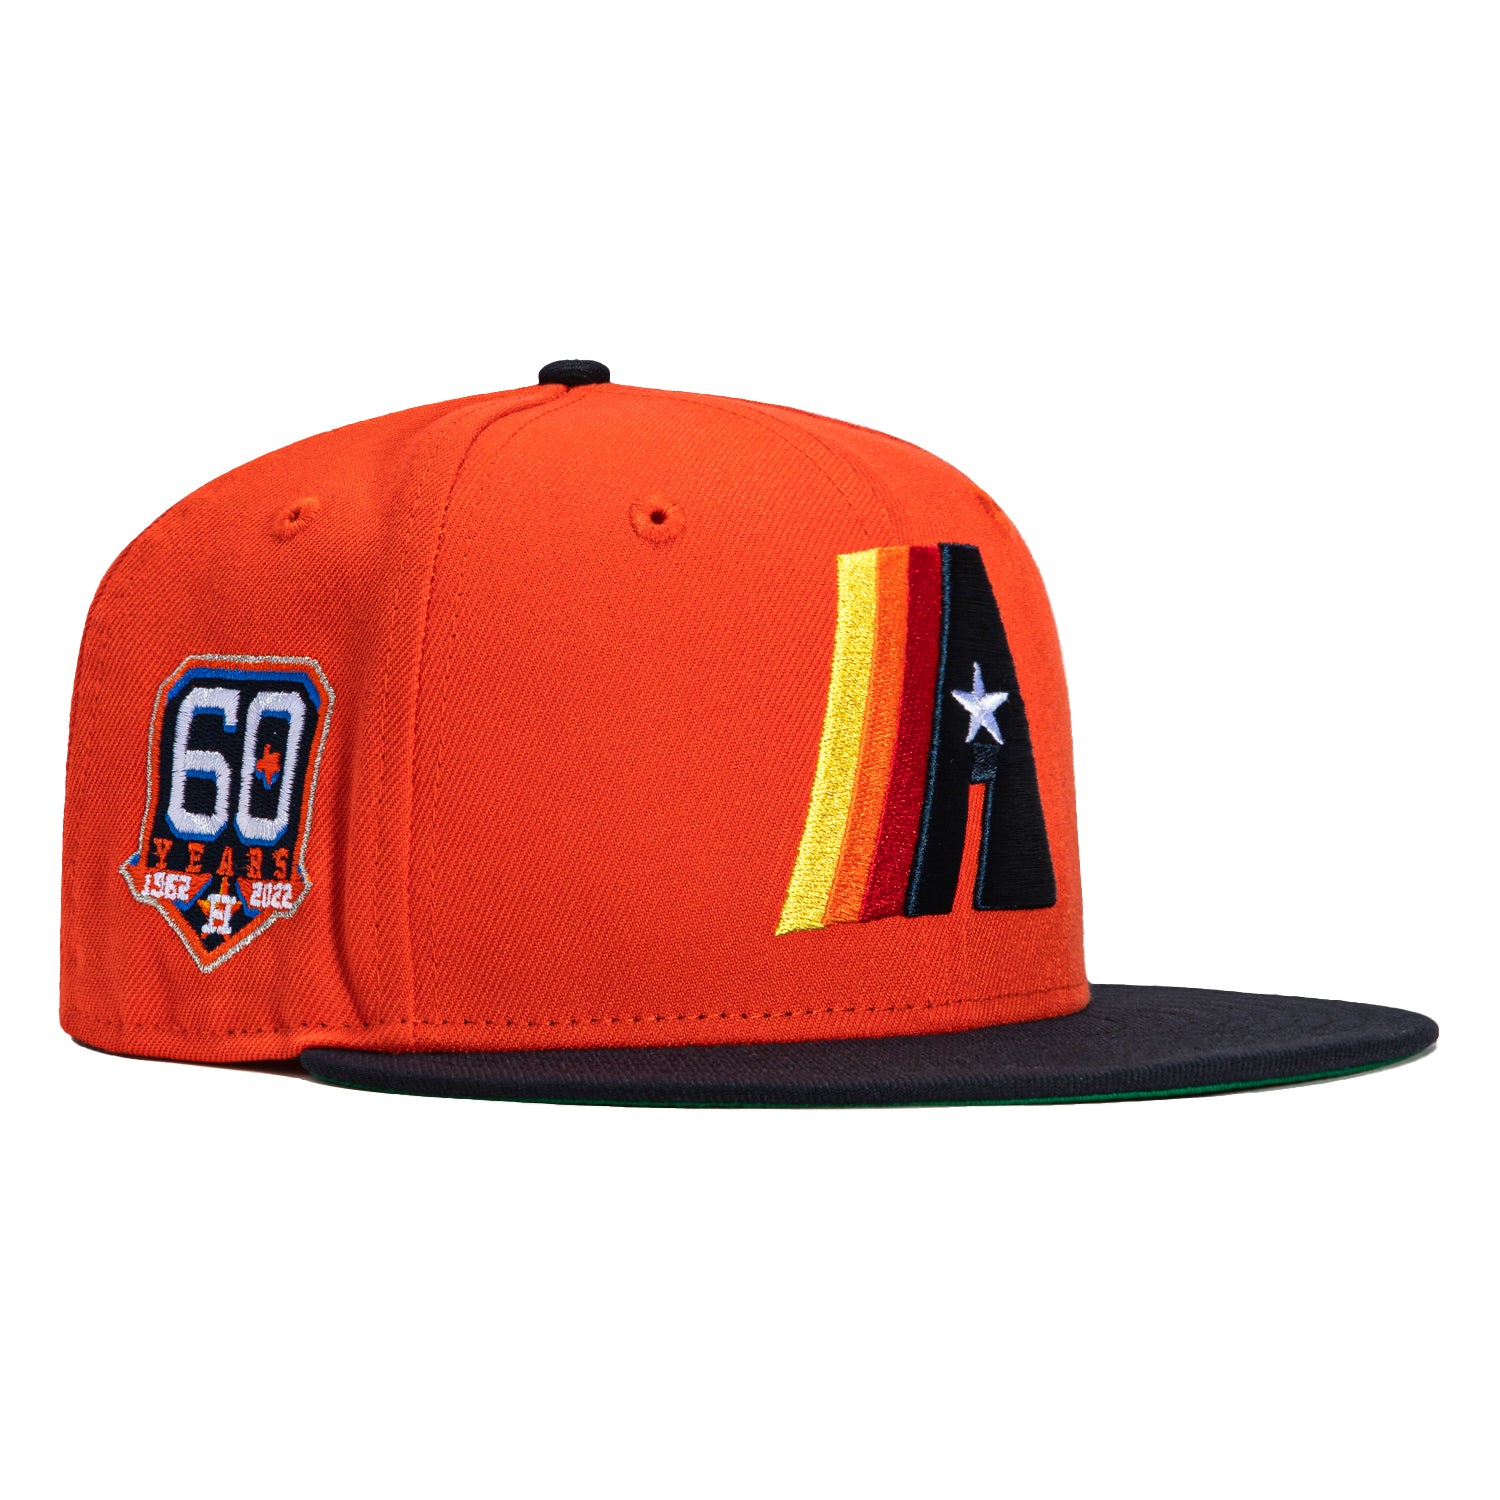 Houston Baseball Hat Light Royal Blue New Era 59FIFTY Fitted Light Royal Blue / Orangeade | Grilled Orange | White / 7 7/8